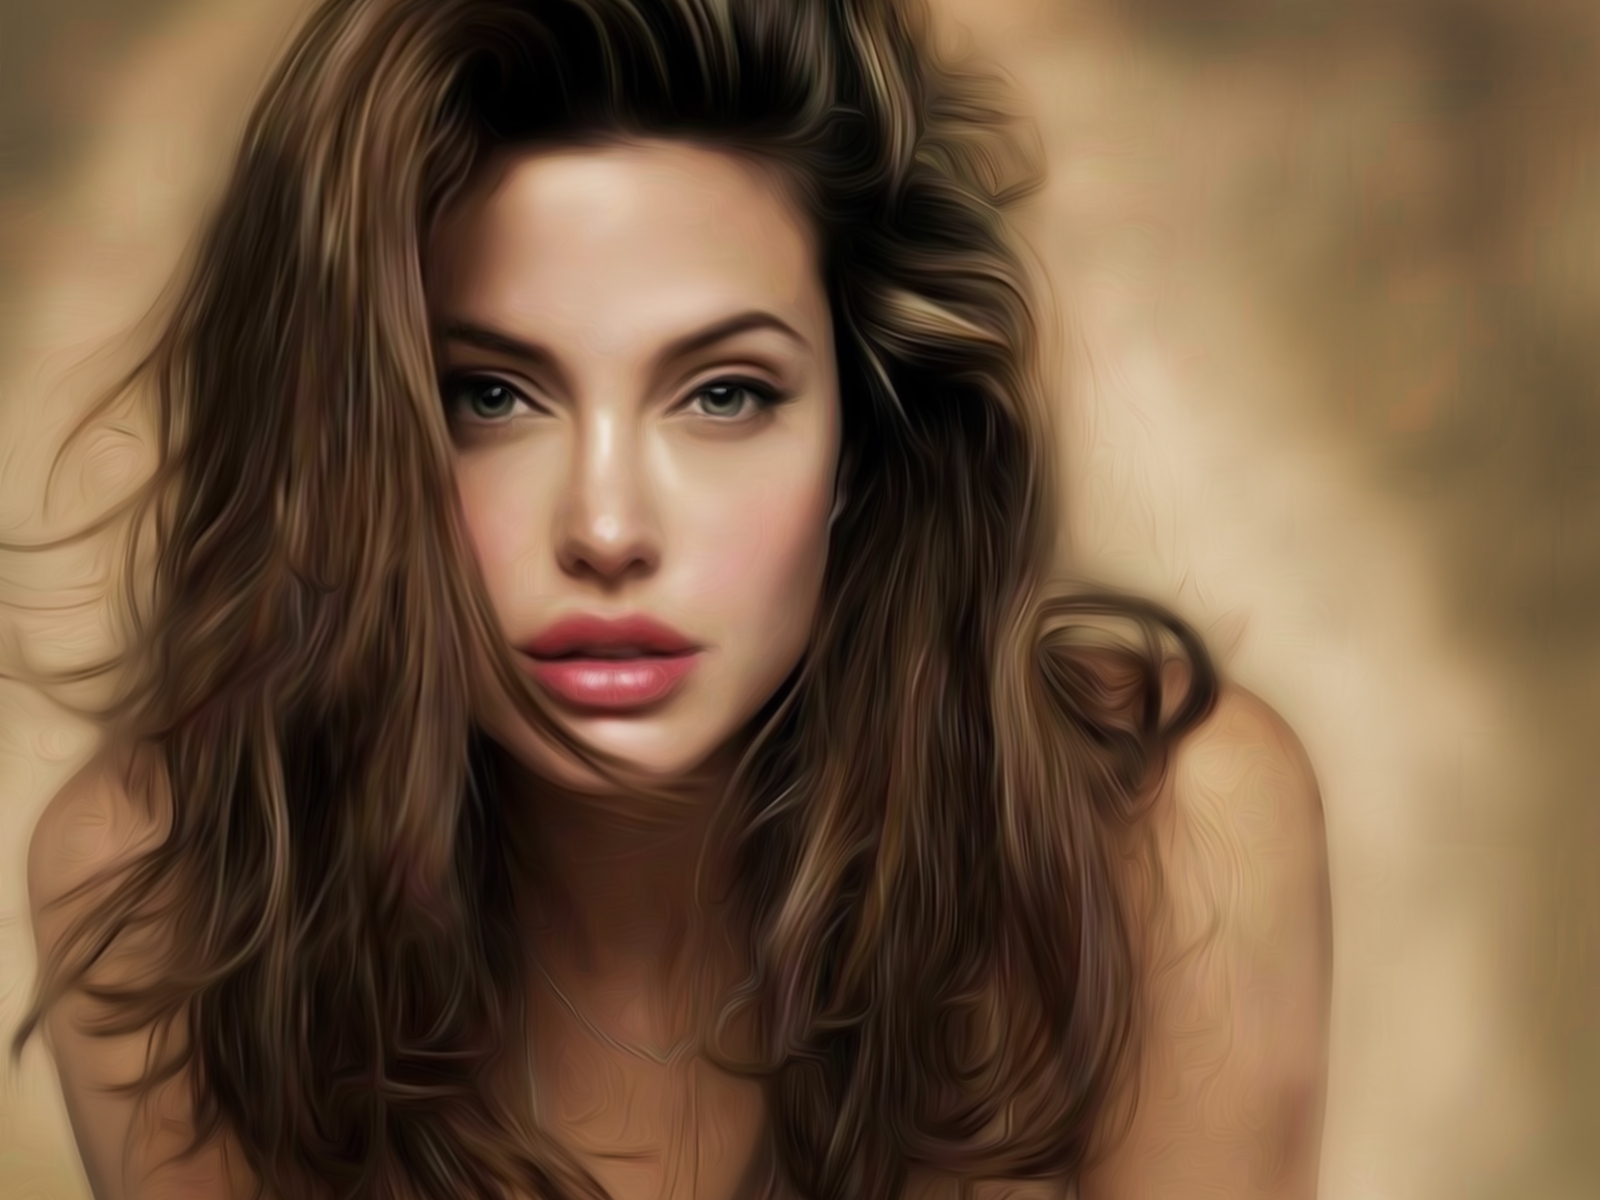 Angelina Jolie Look Art for 1600 x 1200 resolution